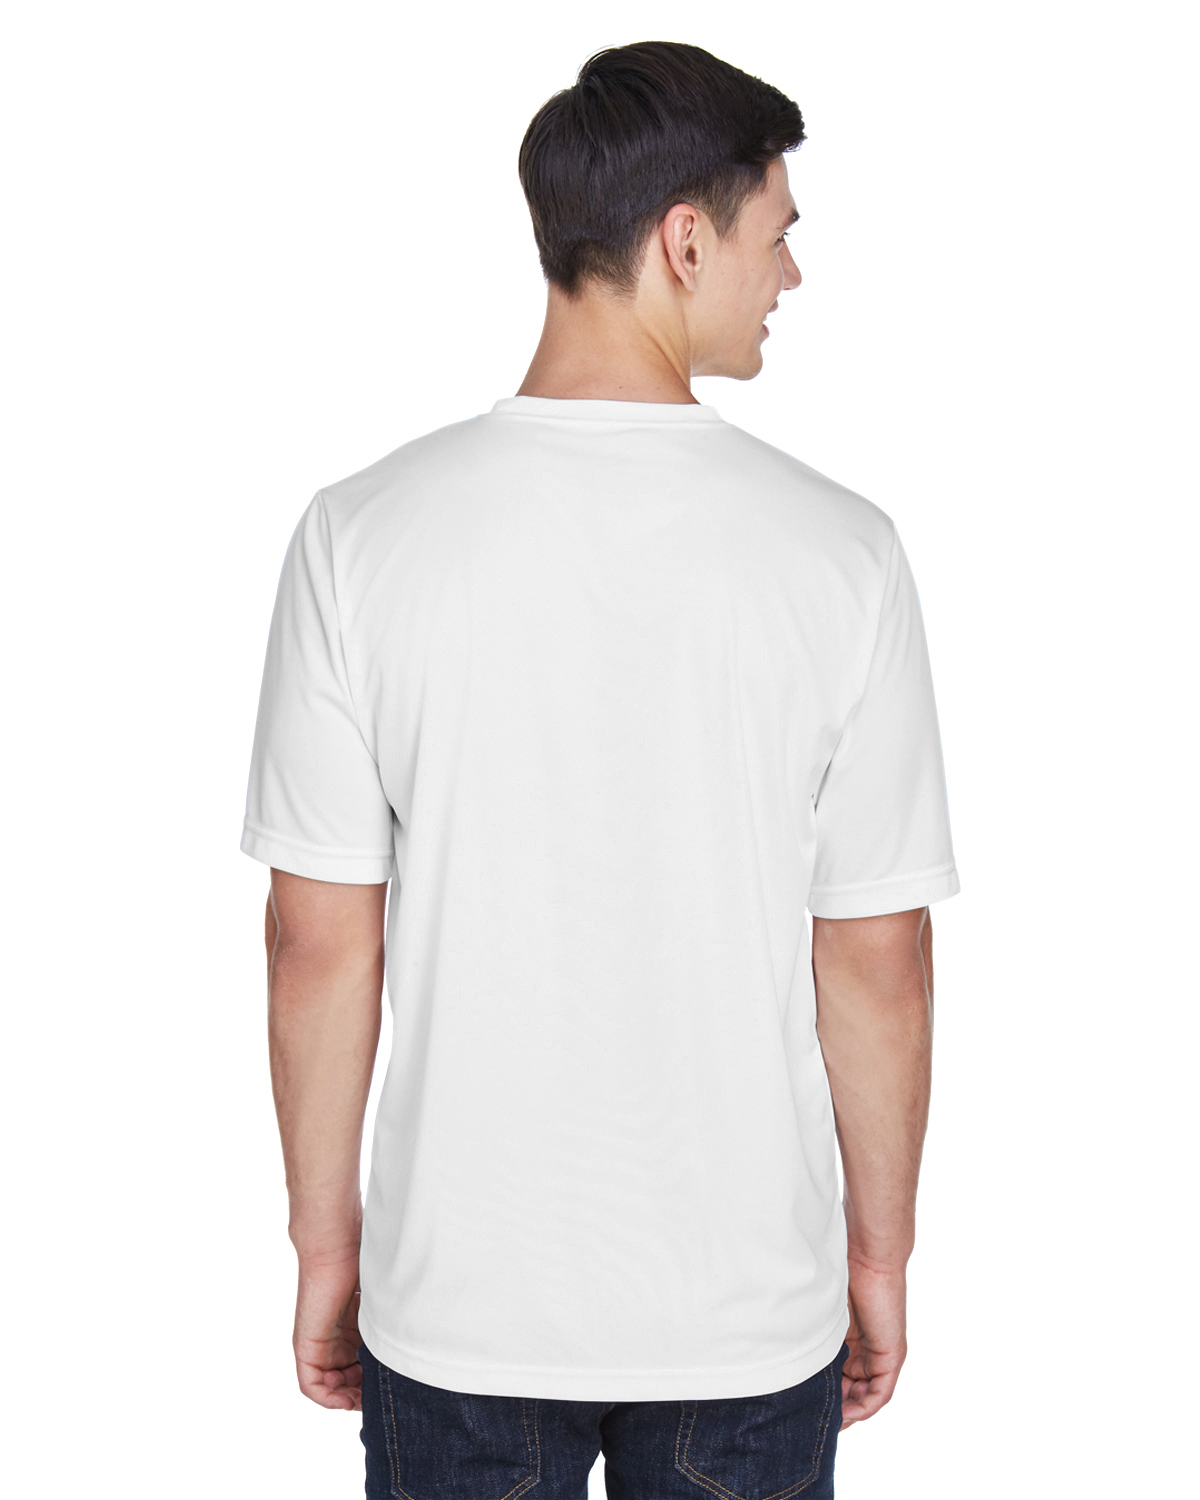 TT11 Men's Zone Performance T-Shirt | BlankTeesUSA